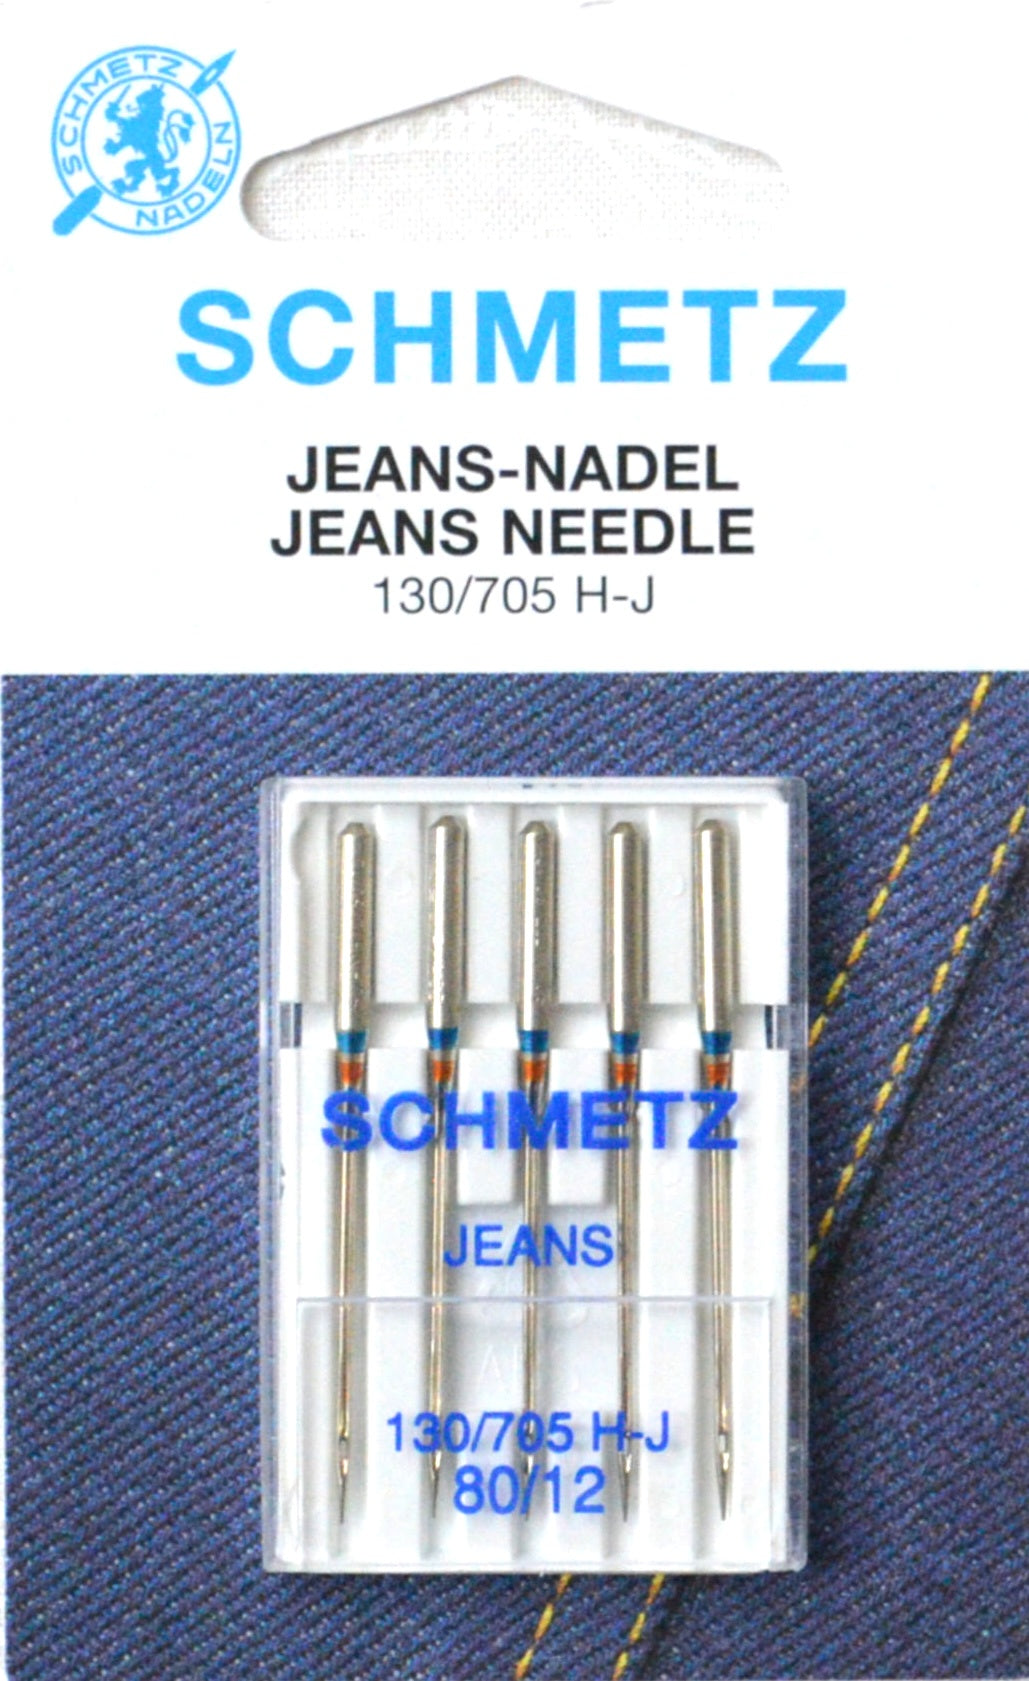 Jeans Needle - 130/705 H-J 80/12